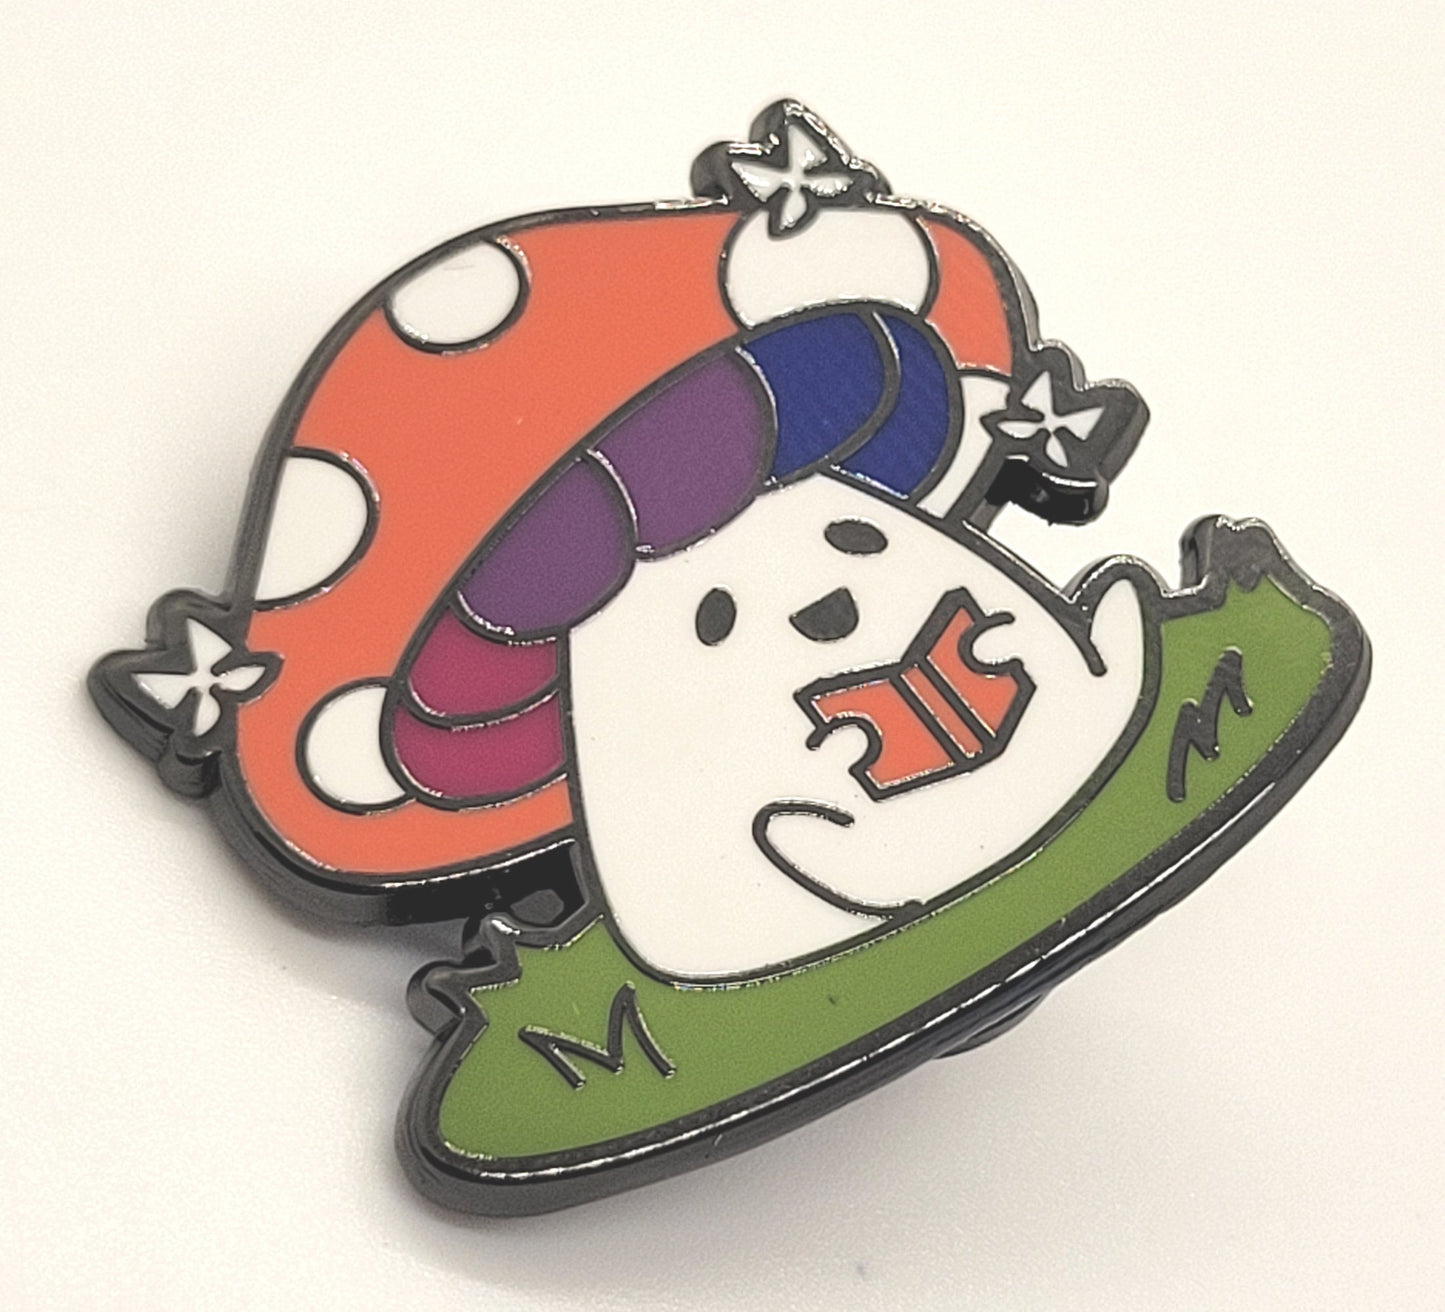 Adorable Mushroom Bi Pride Pin with Subtle Bisexual Flag Colors